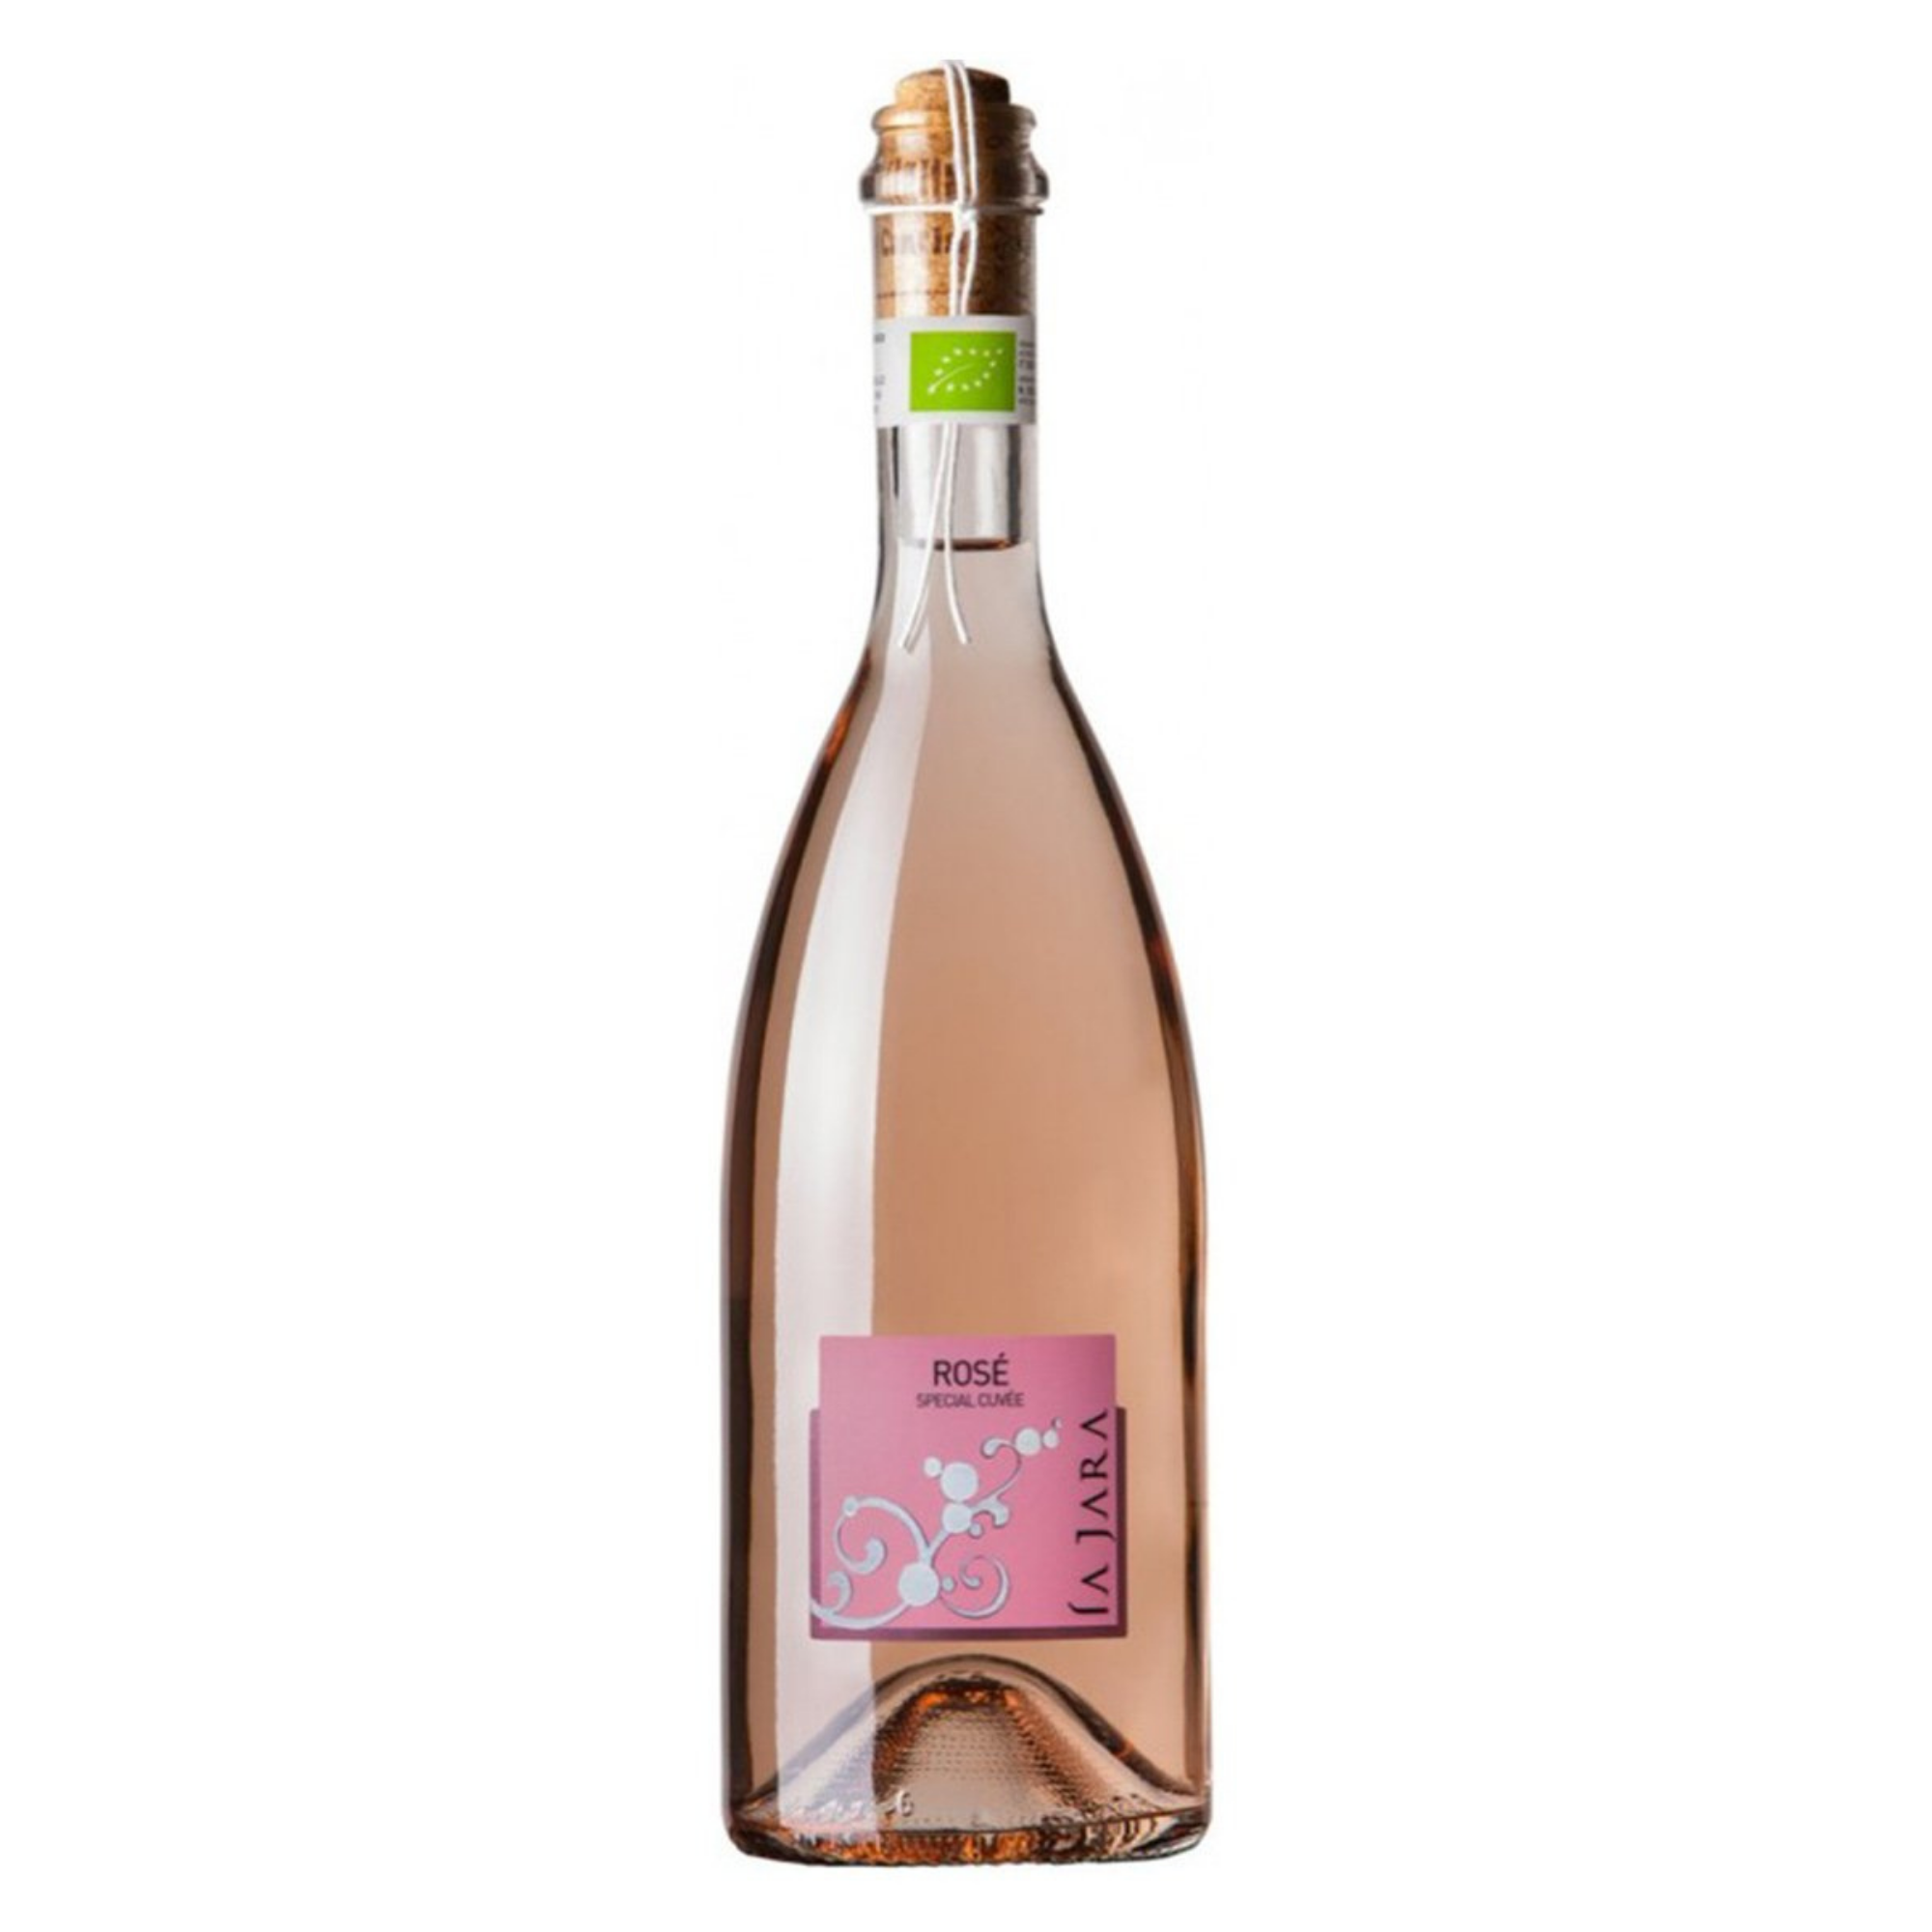 3 La Jara Organic Sparkling Prosecco Rose €16 per bottle